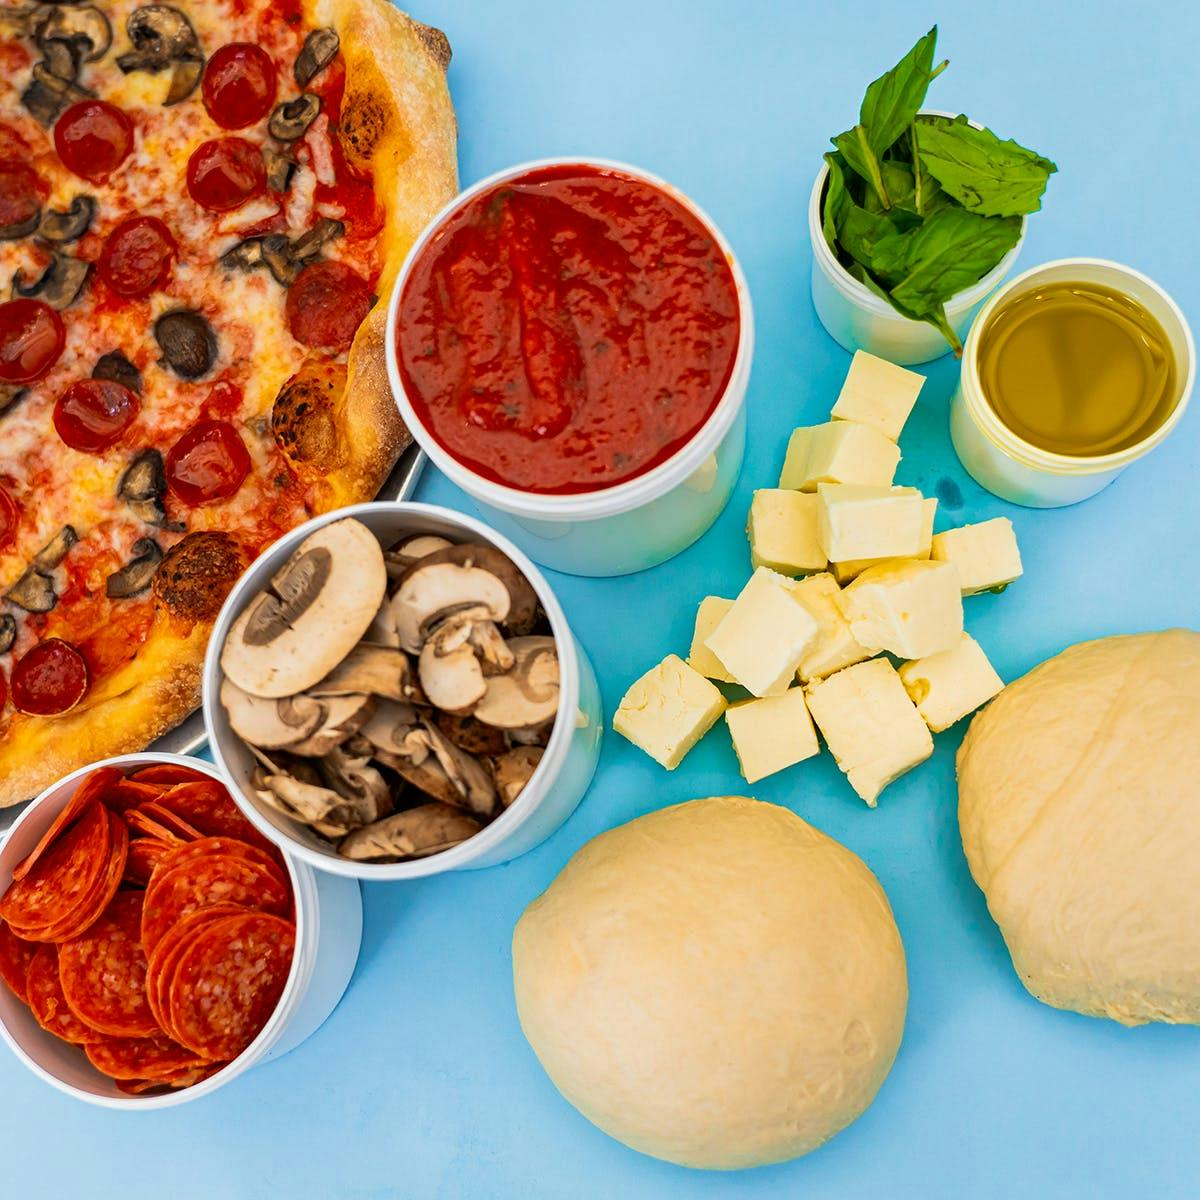 DIY PIZZA KIT — Tonino's Pizzeria and Panini